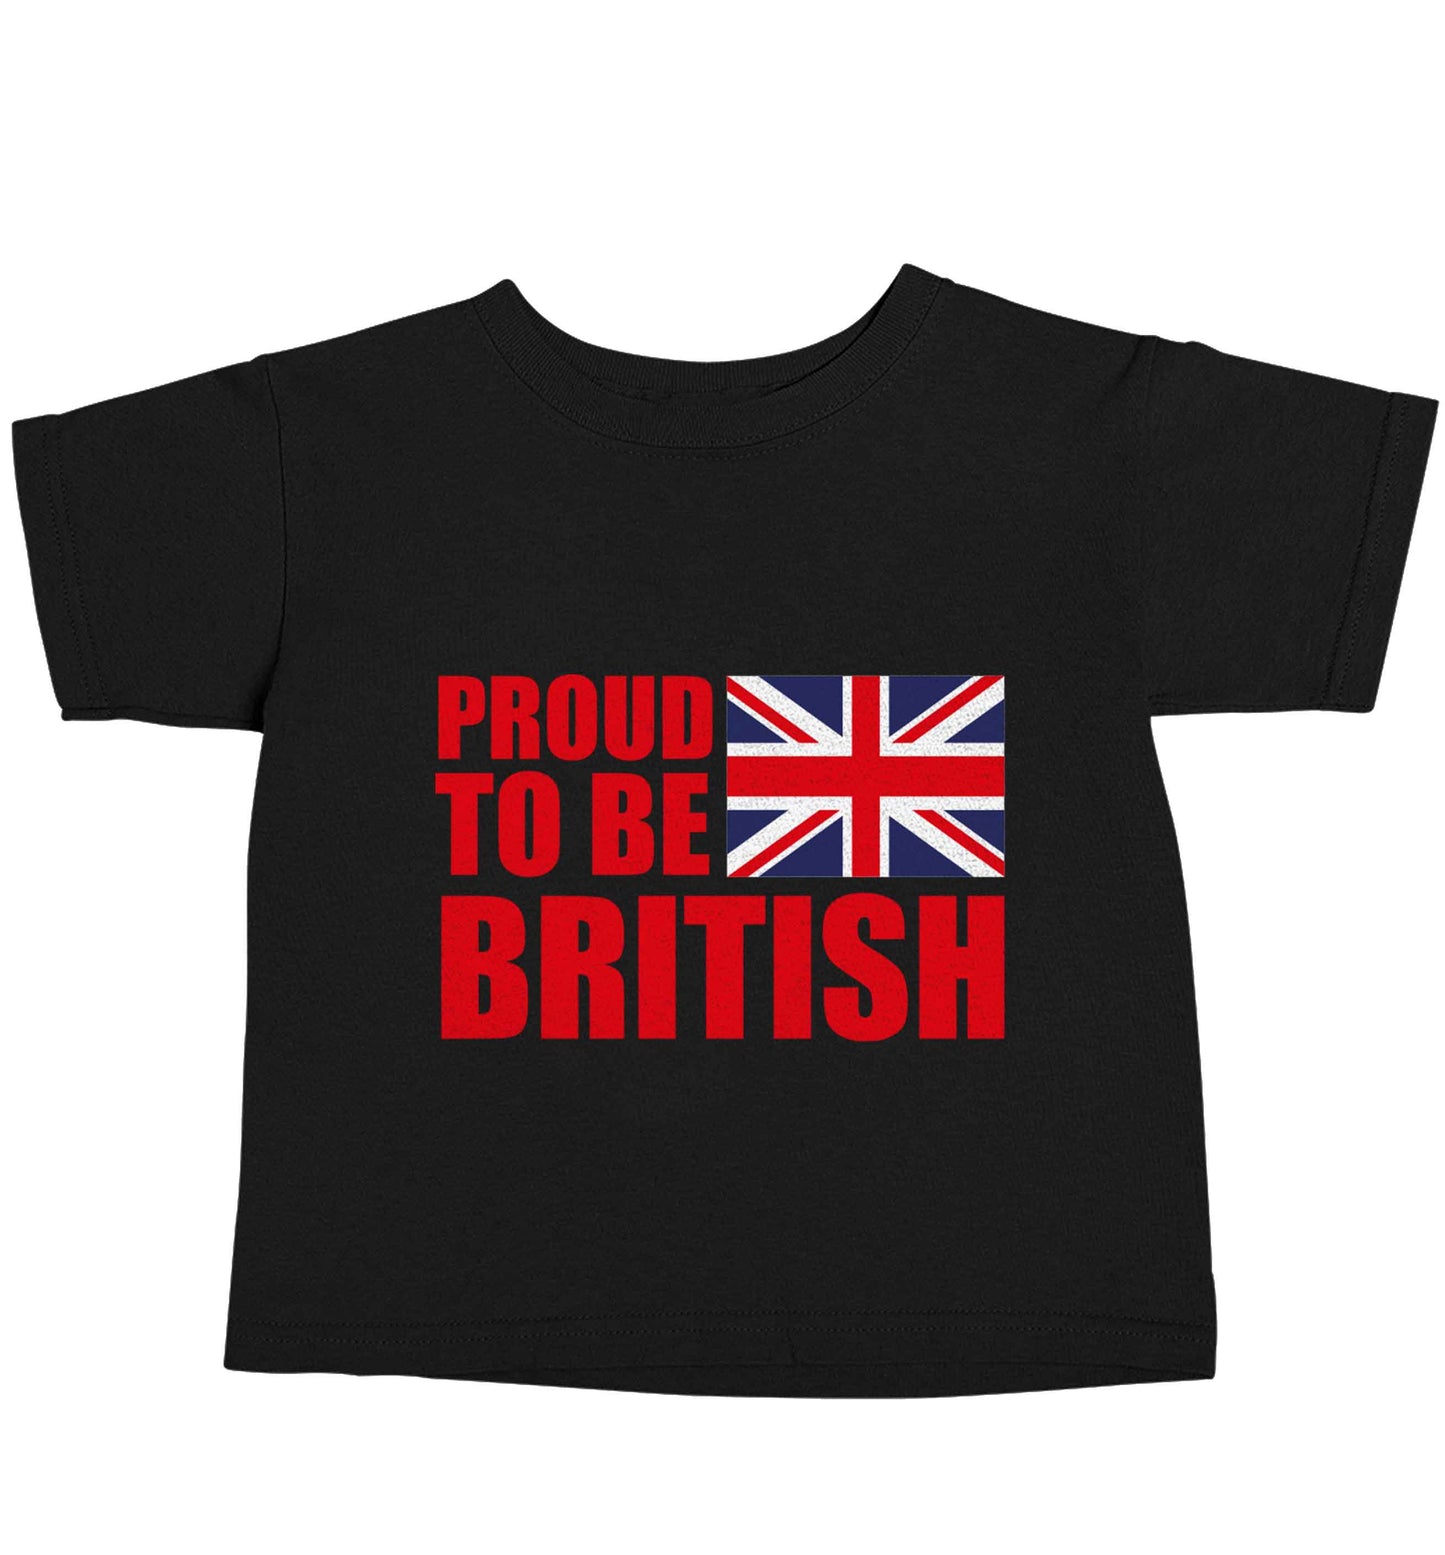 Proud to be British Black baby toddler Tshirt 2 years